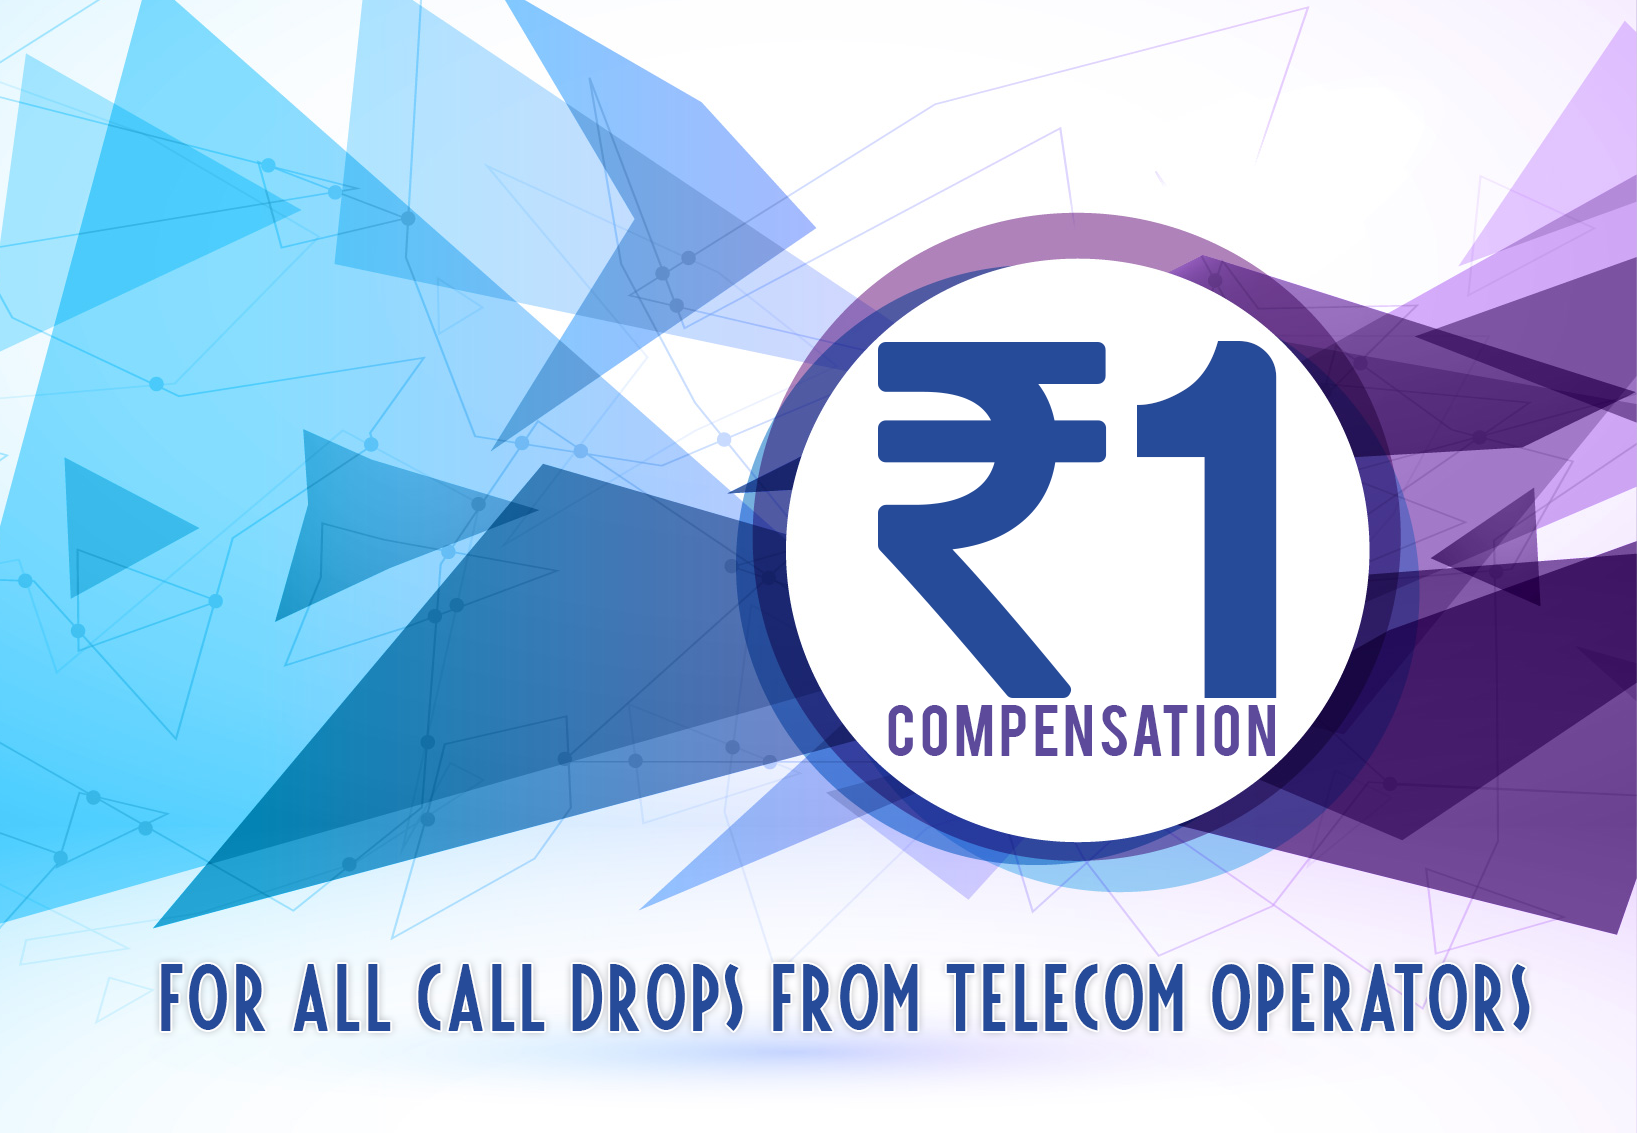 Re-1-Compensation-by-telecom-operators